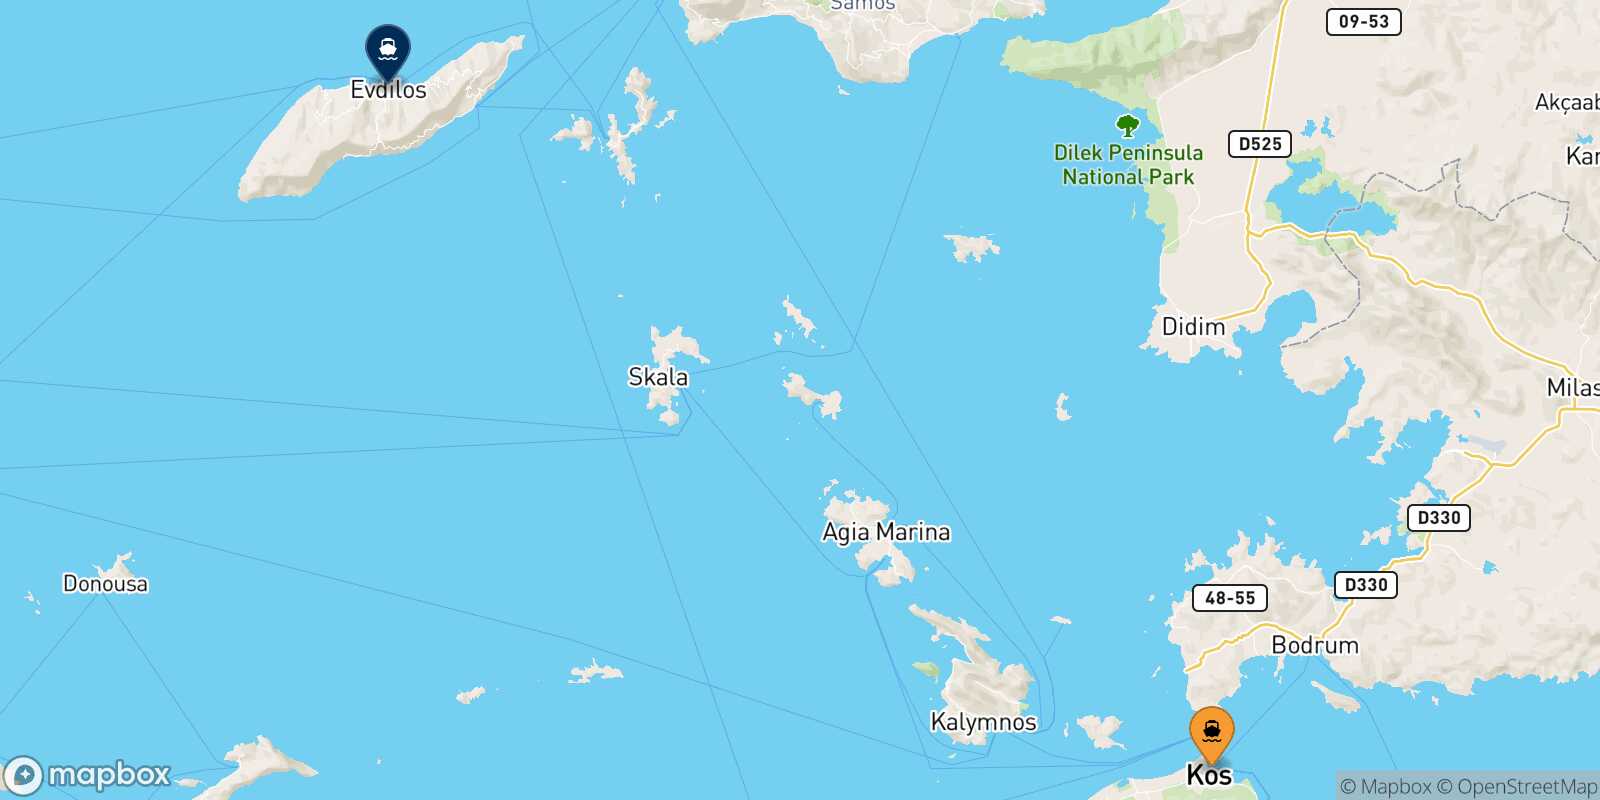 Kos Evdilos (Ikaria) route map